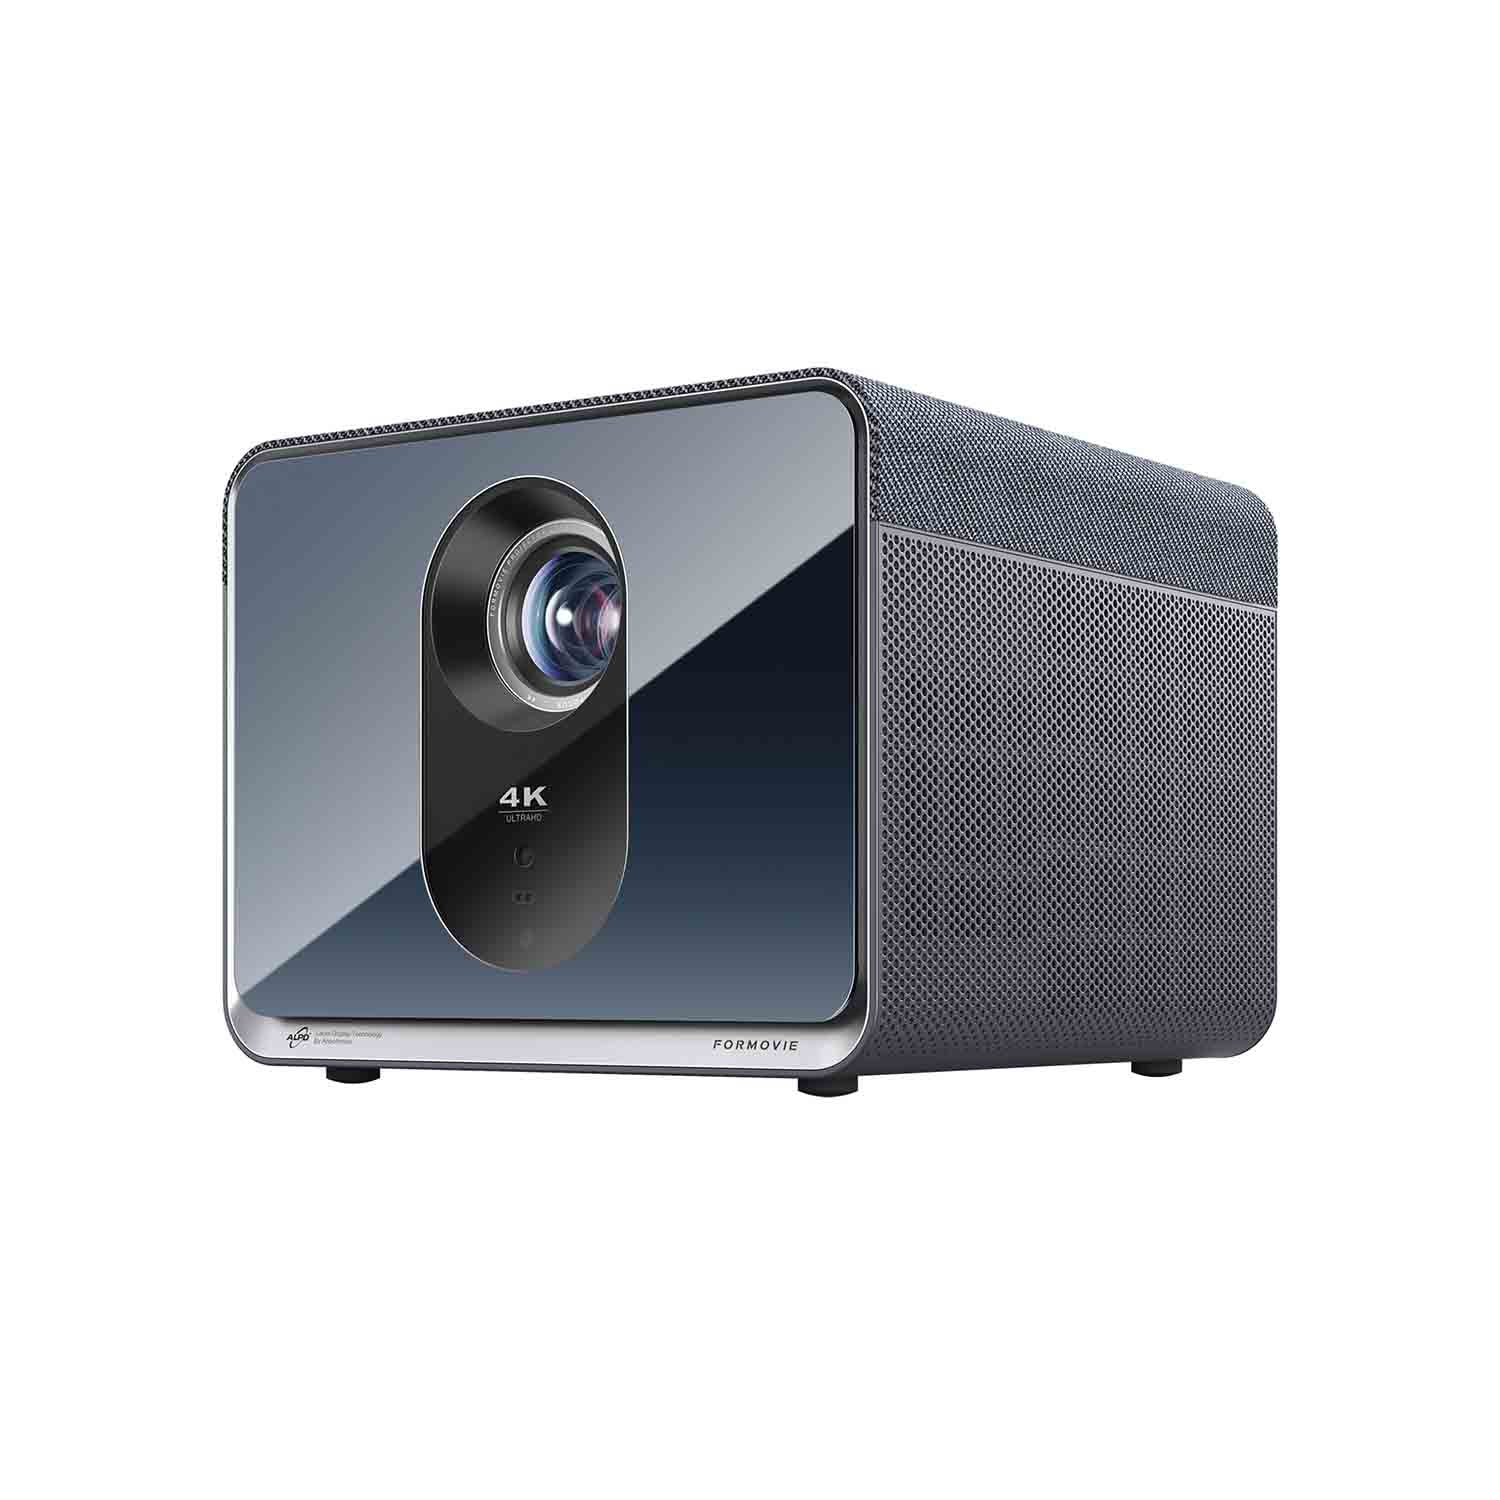 Formovie X5 Echte Cinema-Like 4K Laserprojector 2450 CVIA Lumen ALPD Draagbare Projector met Denon-luidspreker